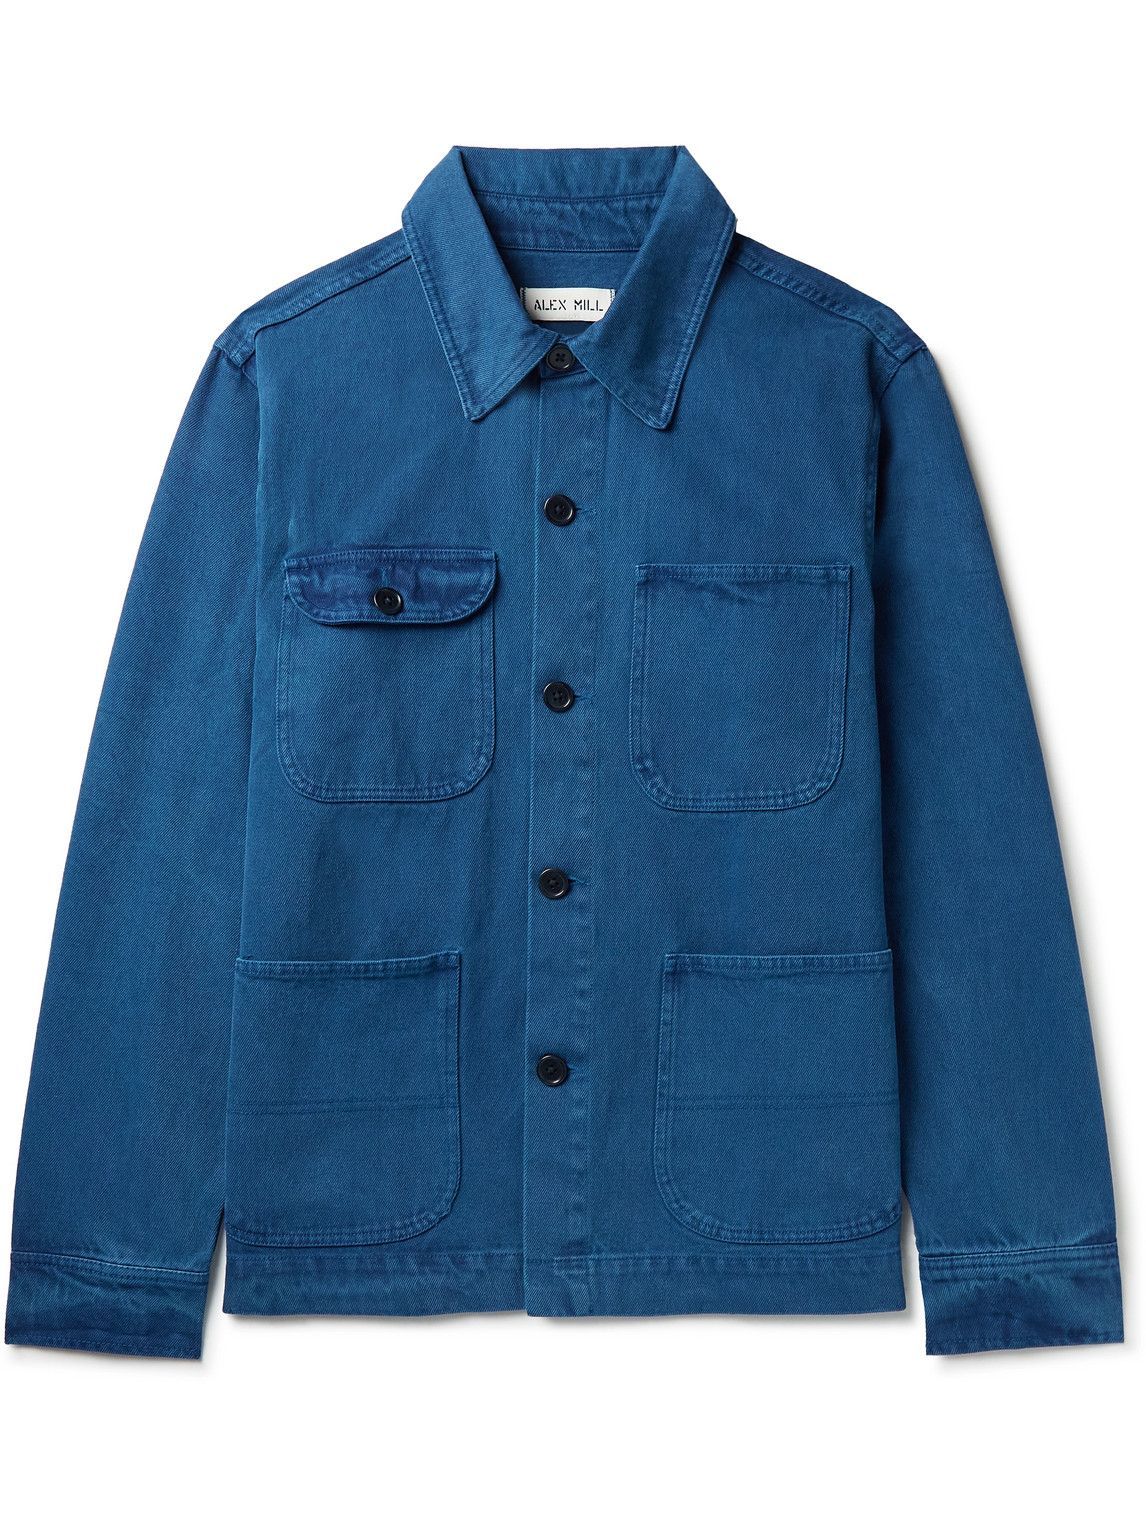 Alex Mill - Garment-Dyed Recycled Denim Jacket - Blue Alex Mill